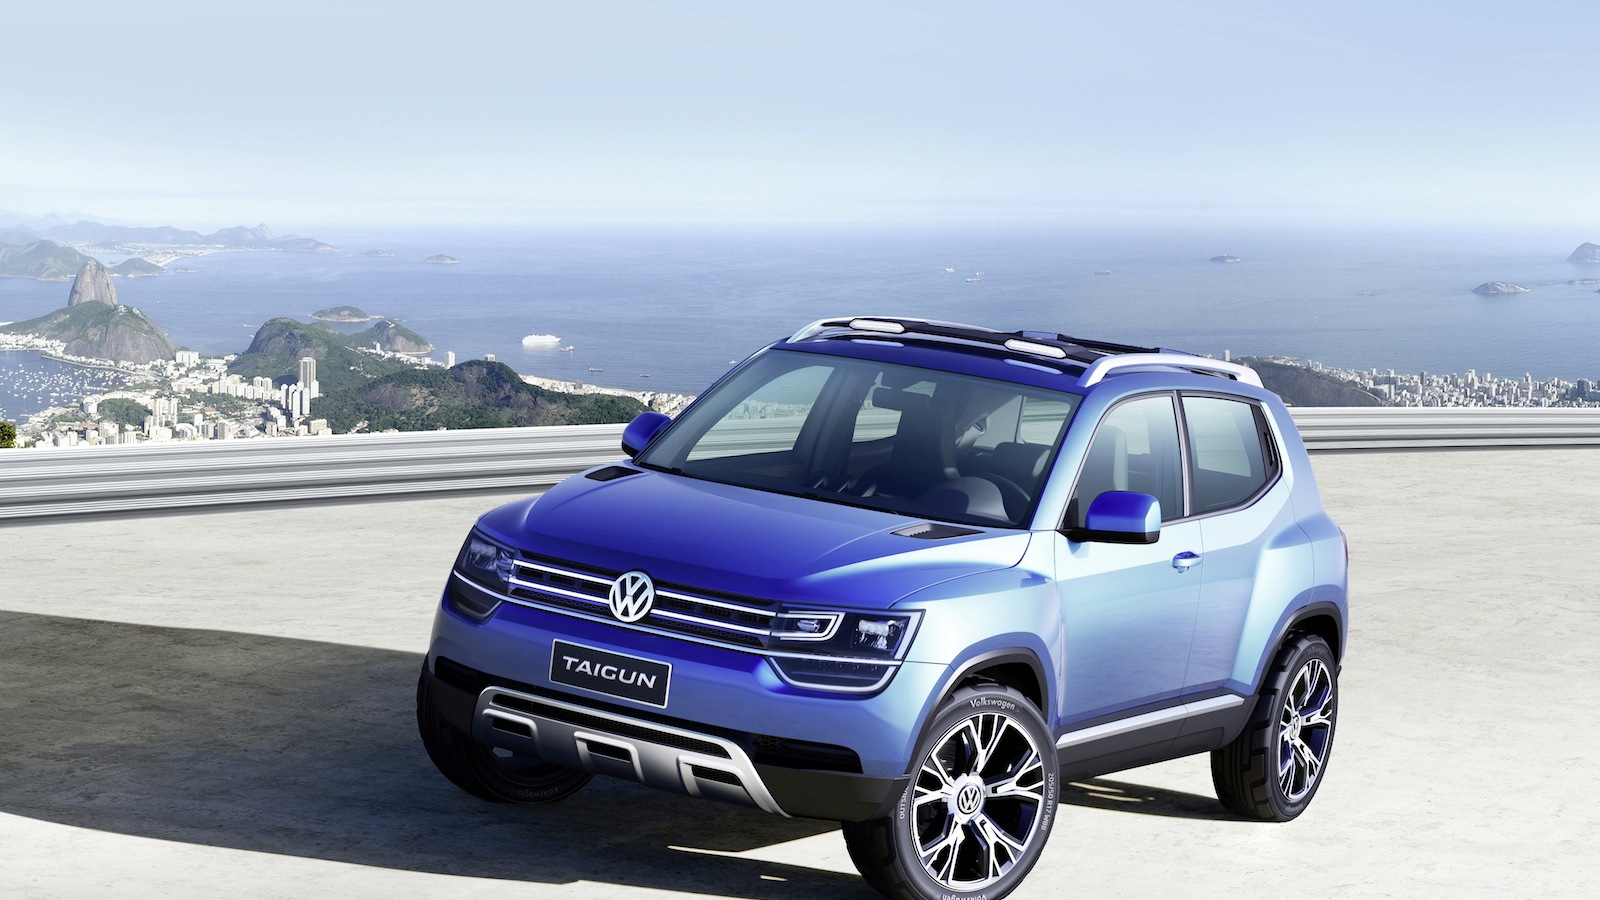 Volkswagen's Taigun crossover concept